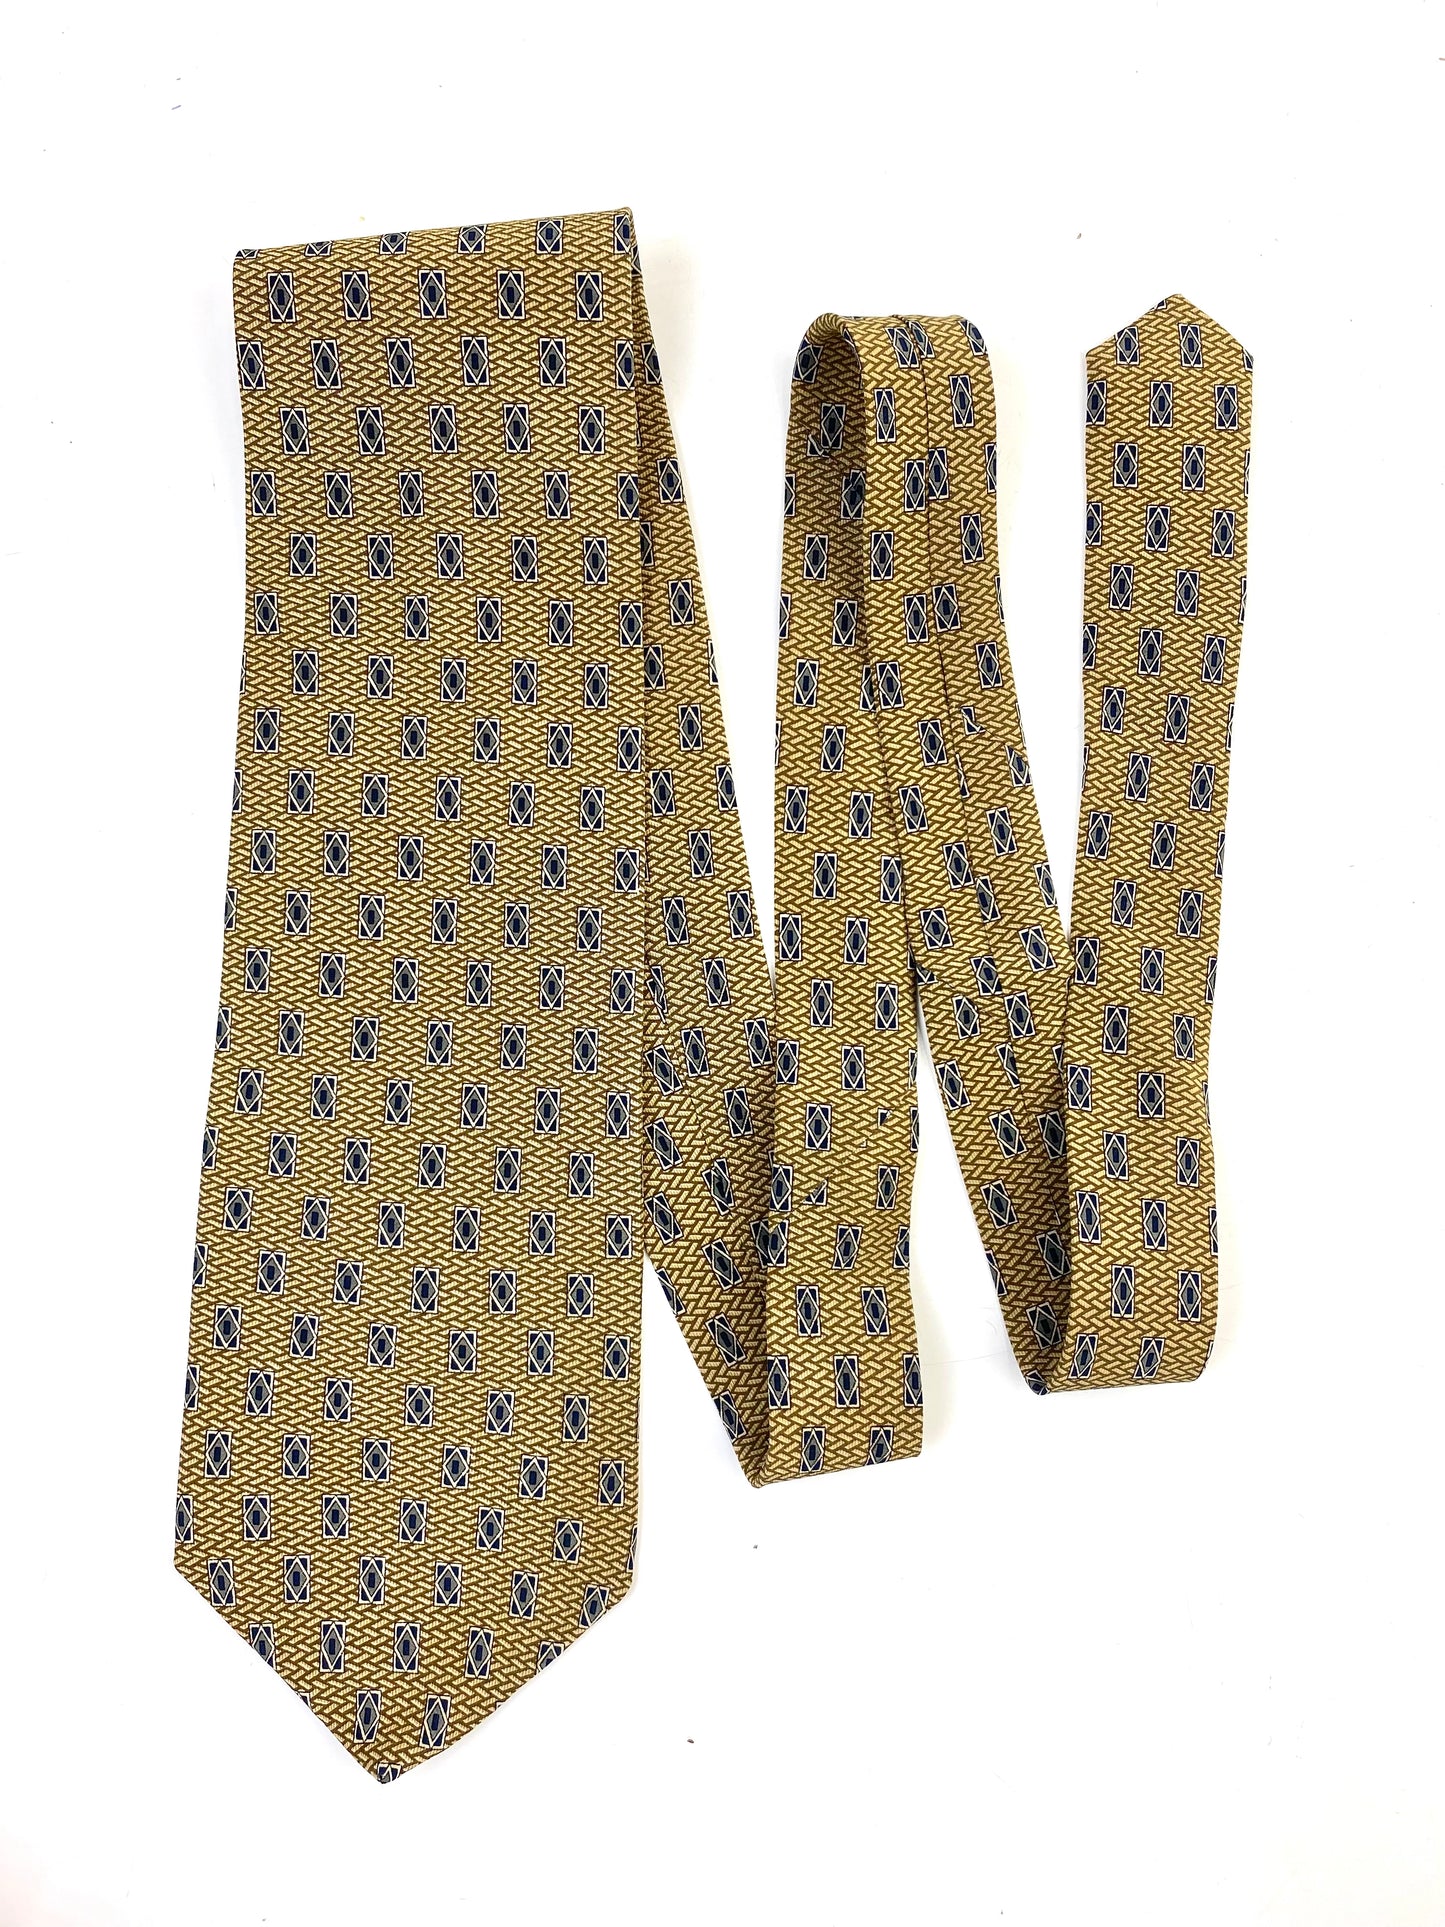 90s Deadstock Silk Necktie, Men's Vintage Gold Geometric Pattern Tie, NOS